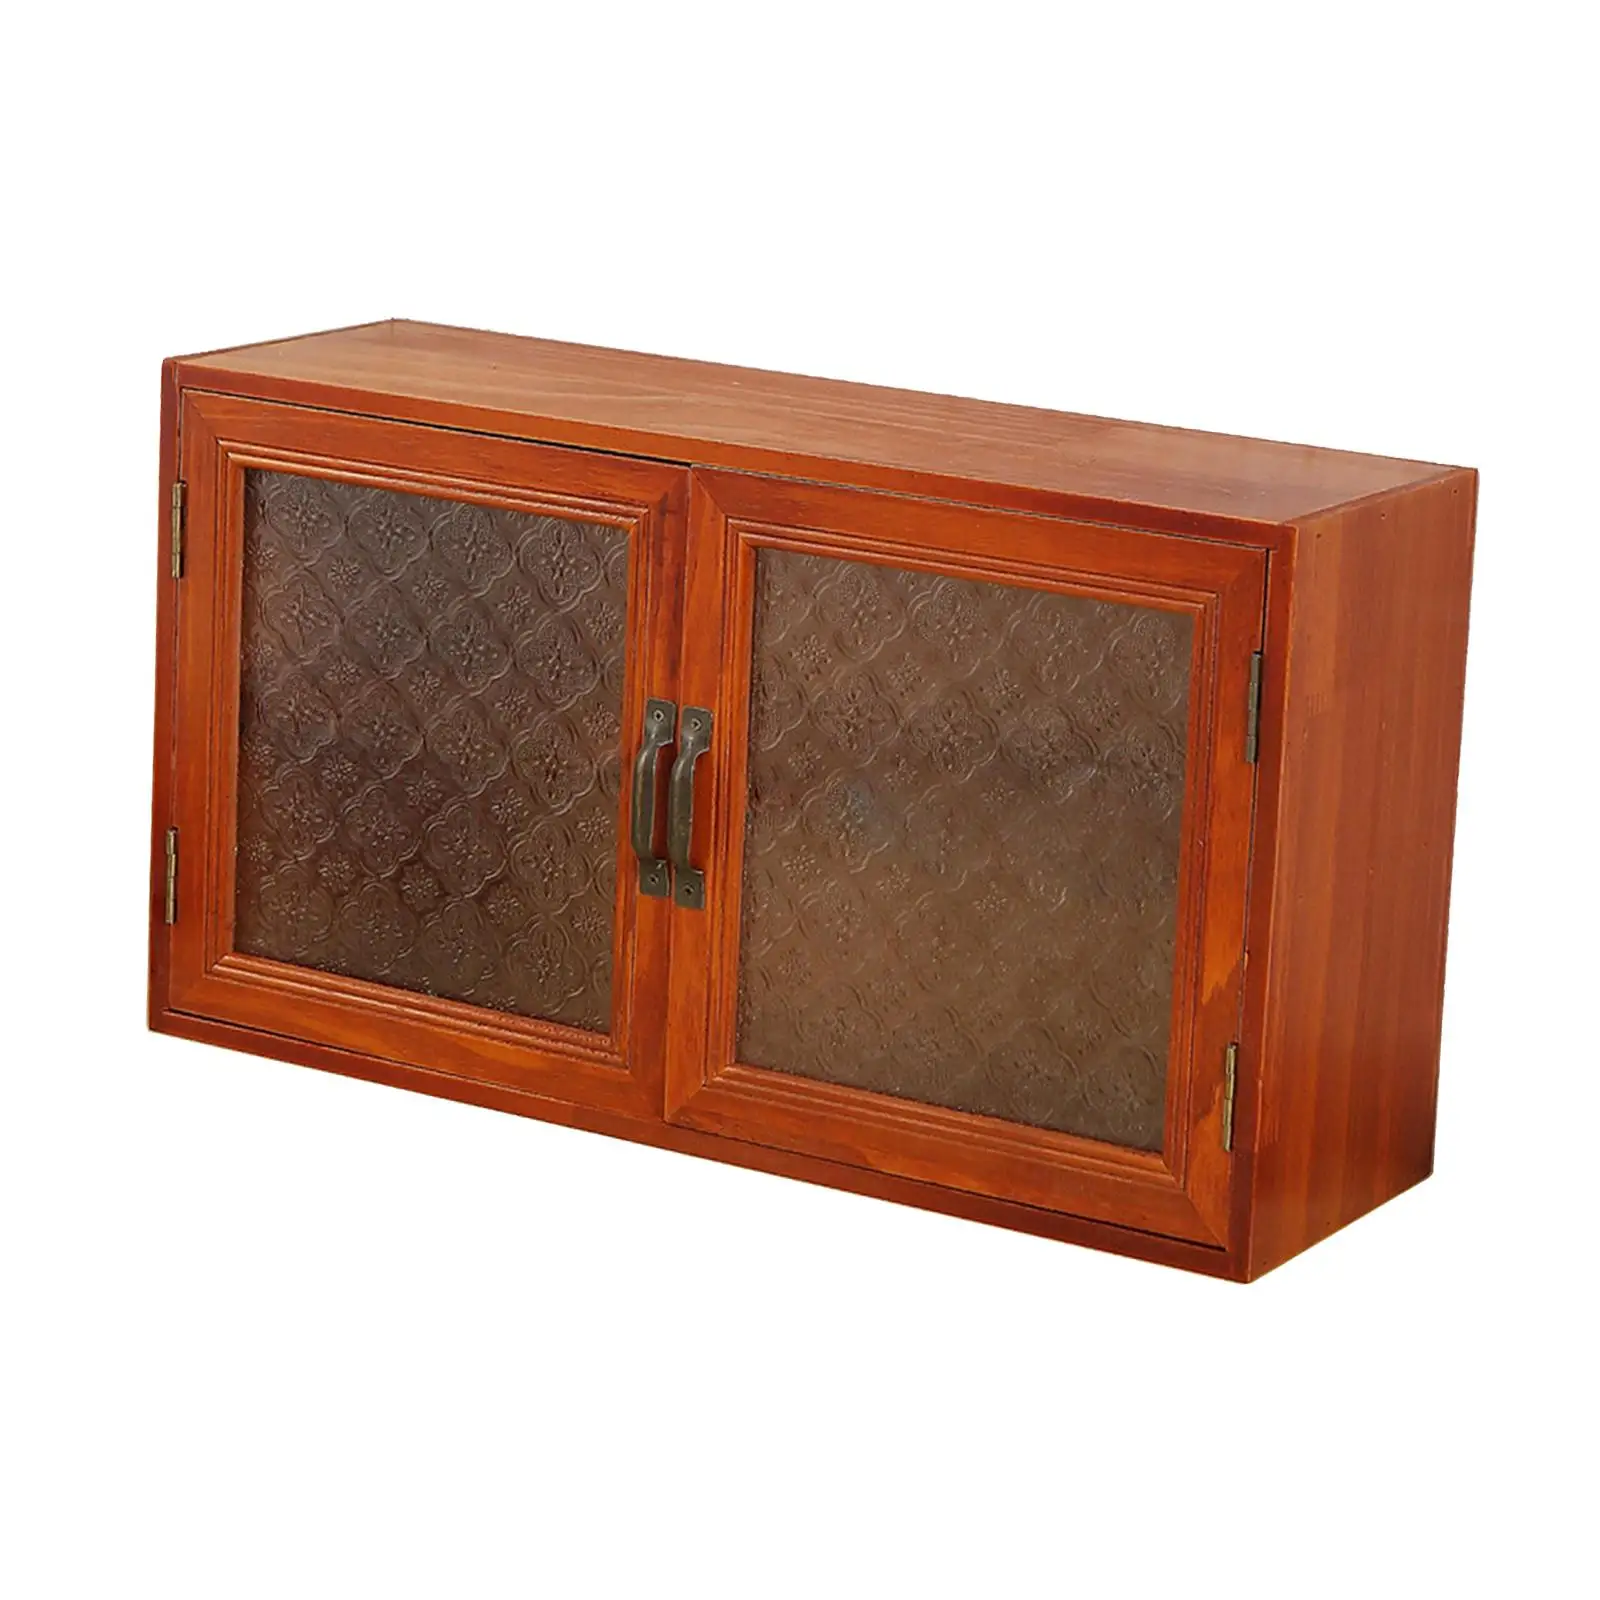 Wood Storage Cabinet Desktop Display Box for Bathroom Bedroom Condiments